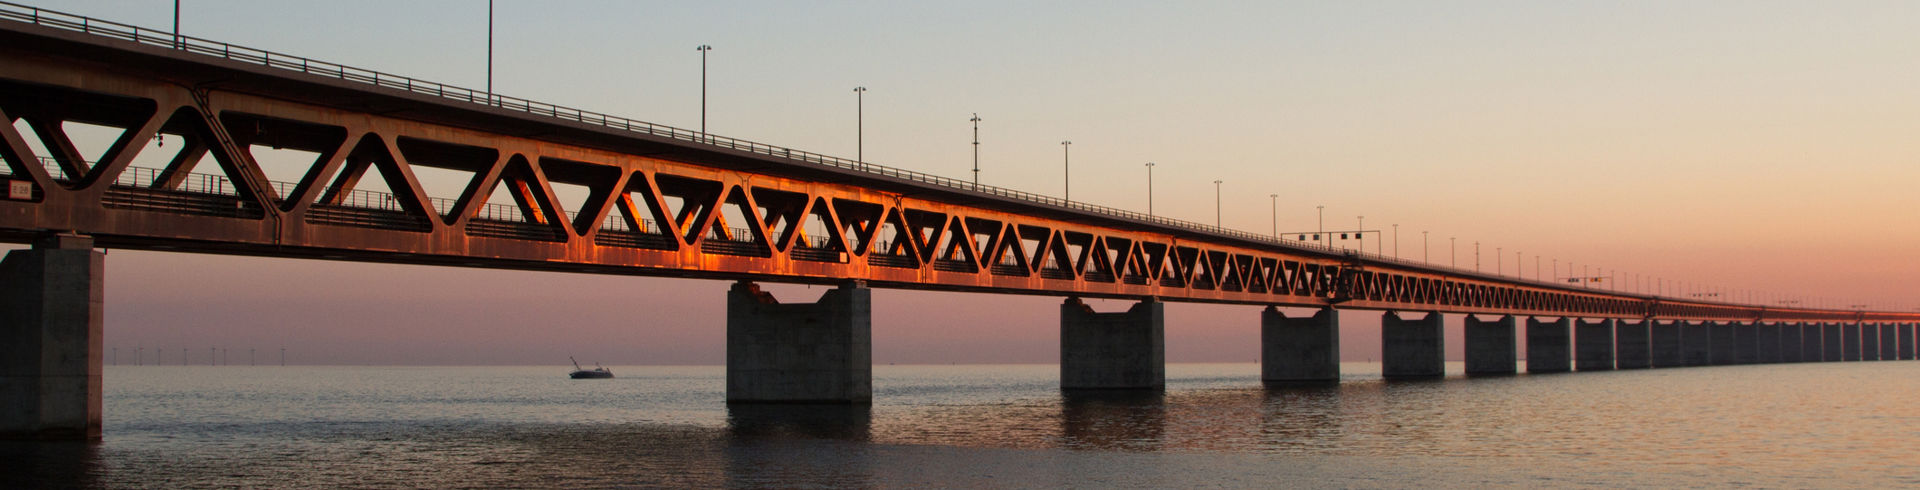 The Øresund Bridge